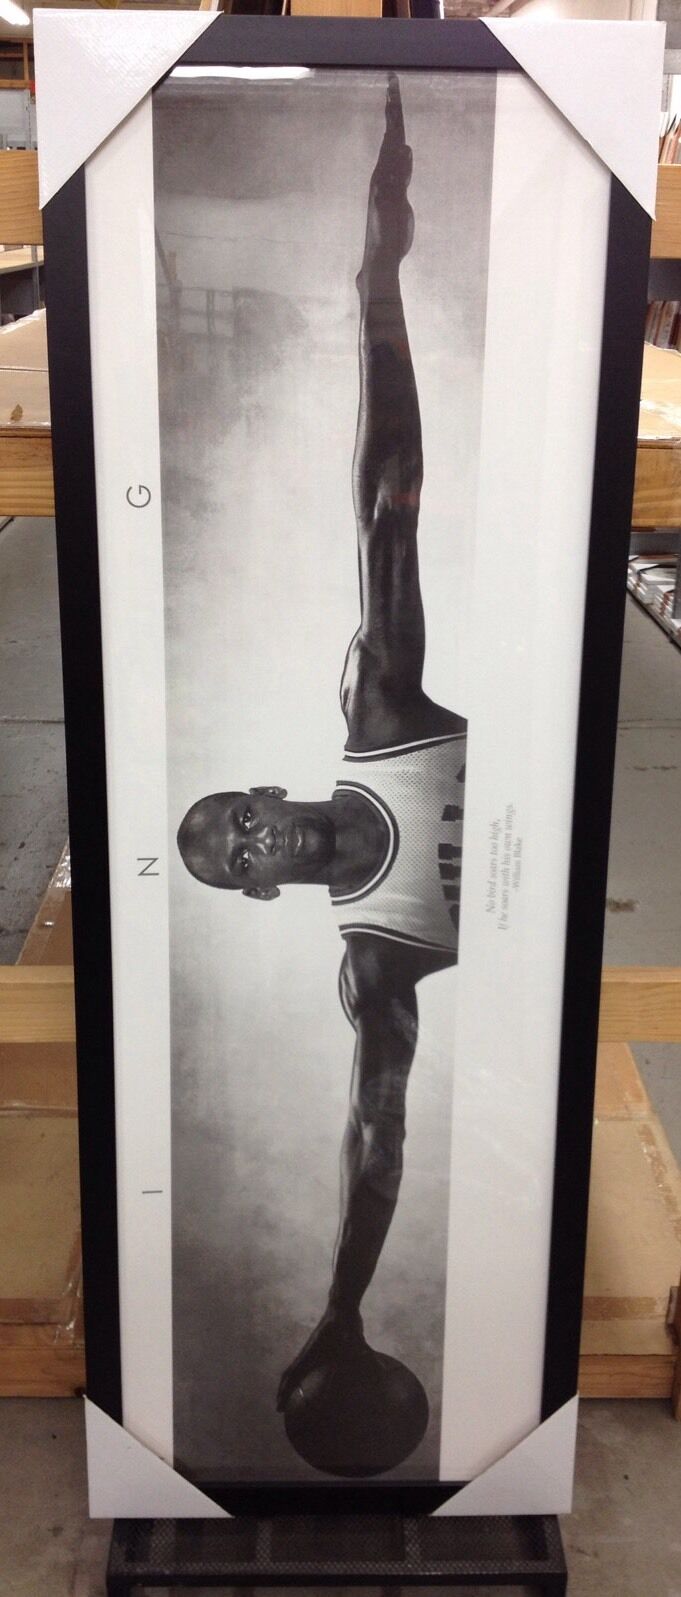 New Framed Michael Jordan Wings Poster HUGE High Quality Life Size Digital Print